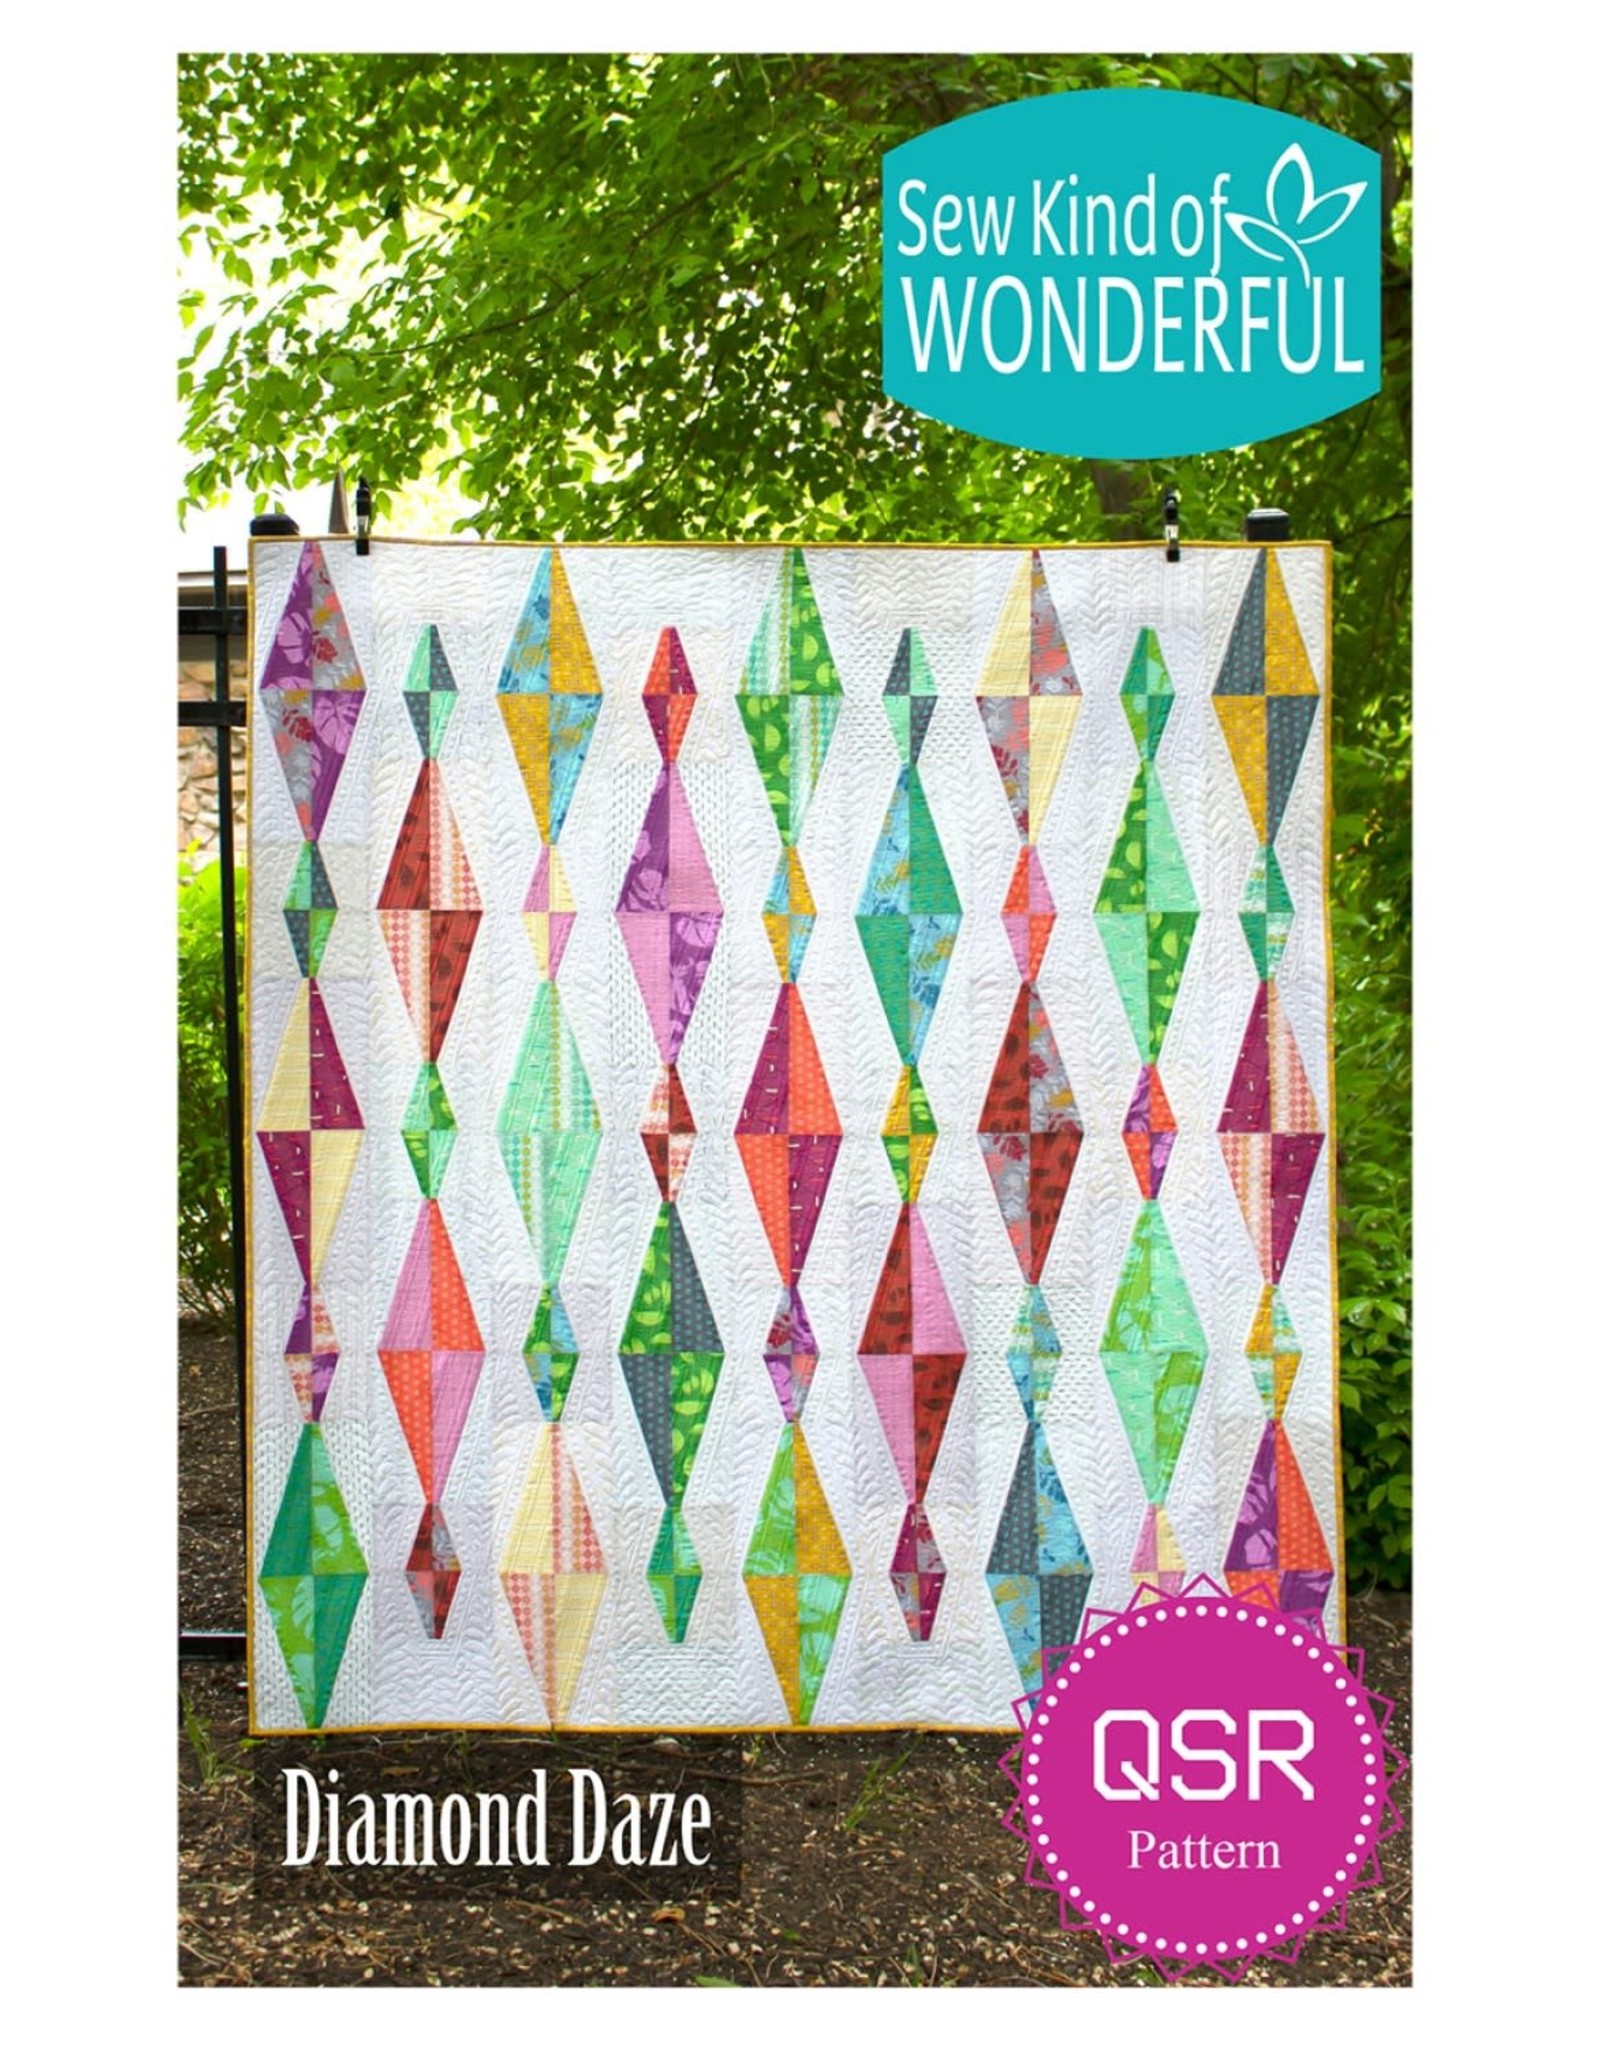 Sew Kind of Wonderful Diamond Daze - pattern for Quick Straight Ruler - #459